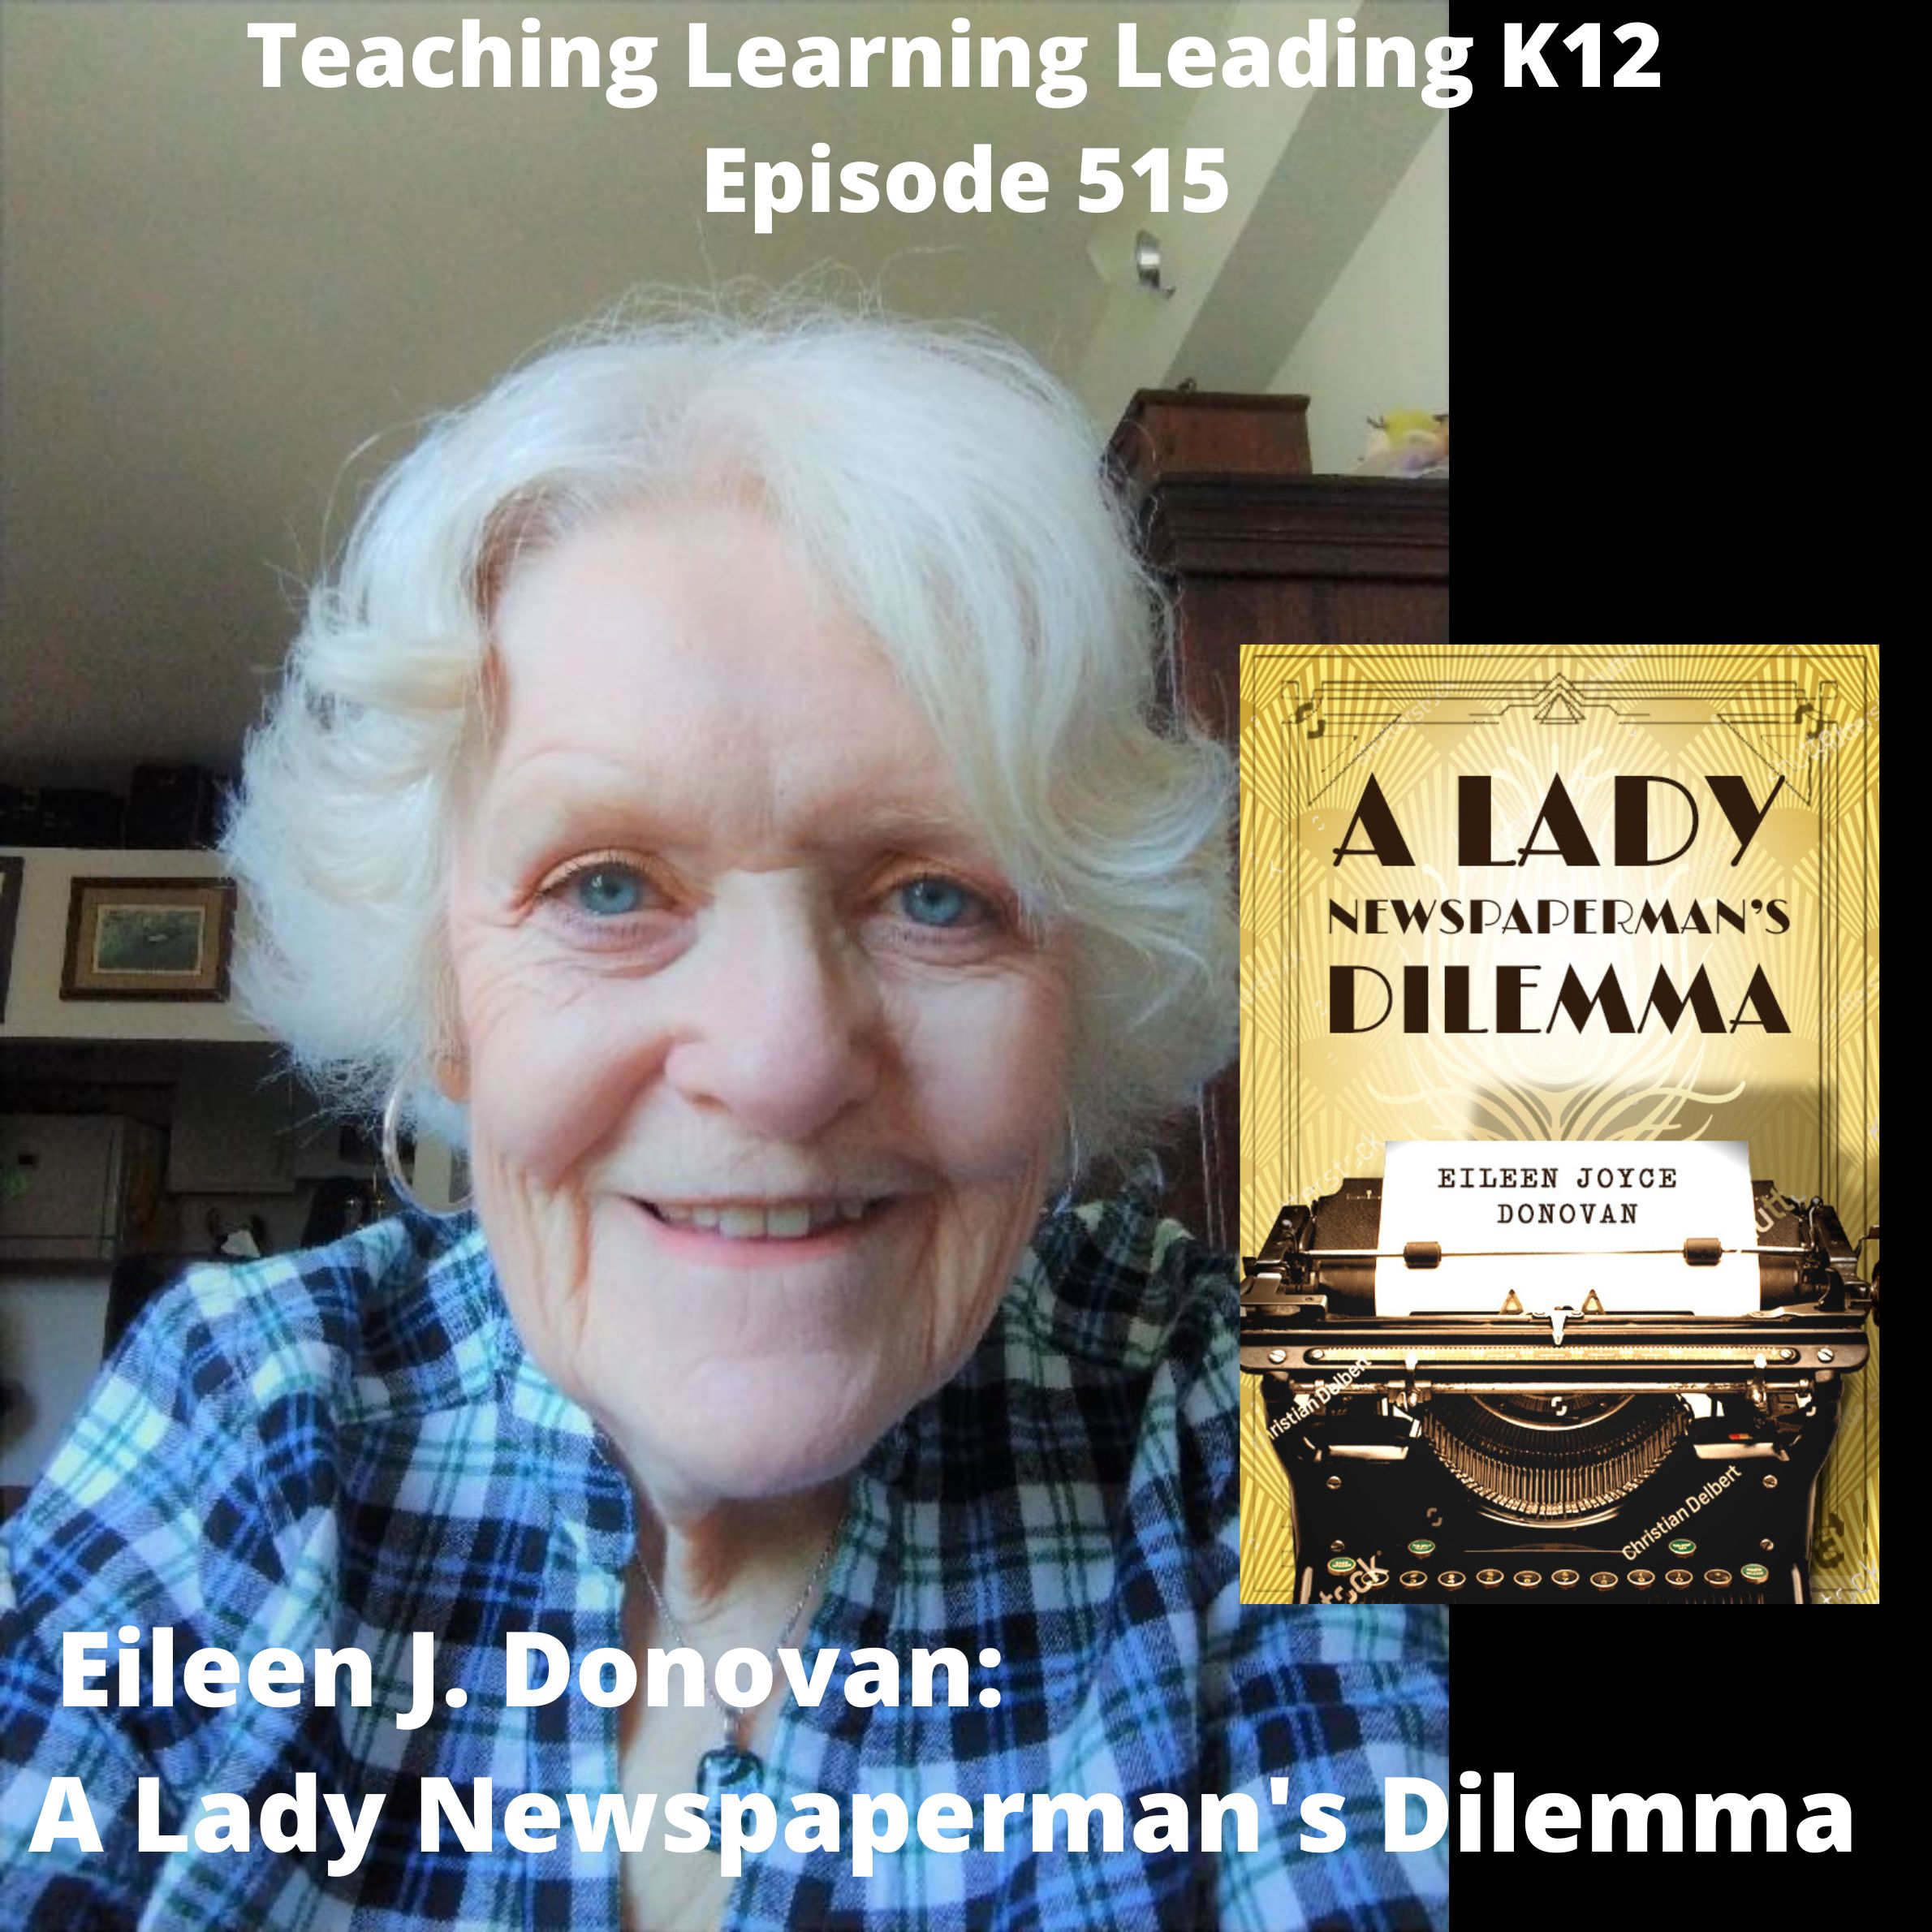 Eileen J. Donovan: A Lady Newspaperman’s Dilemma - 515 Image